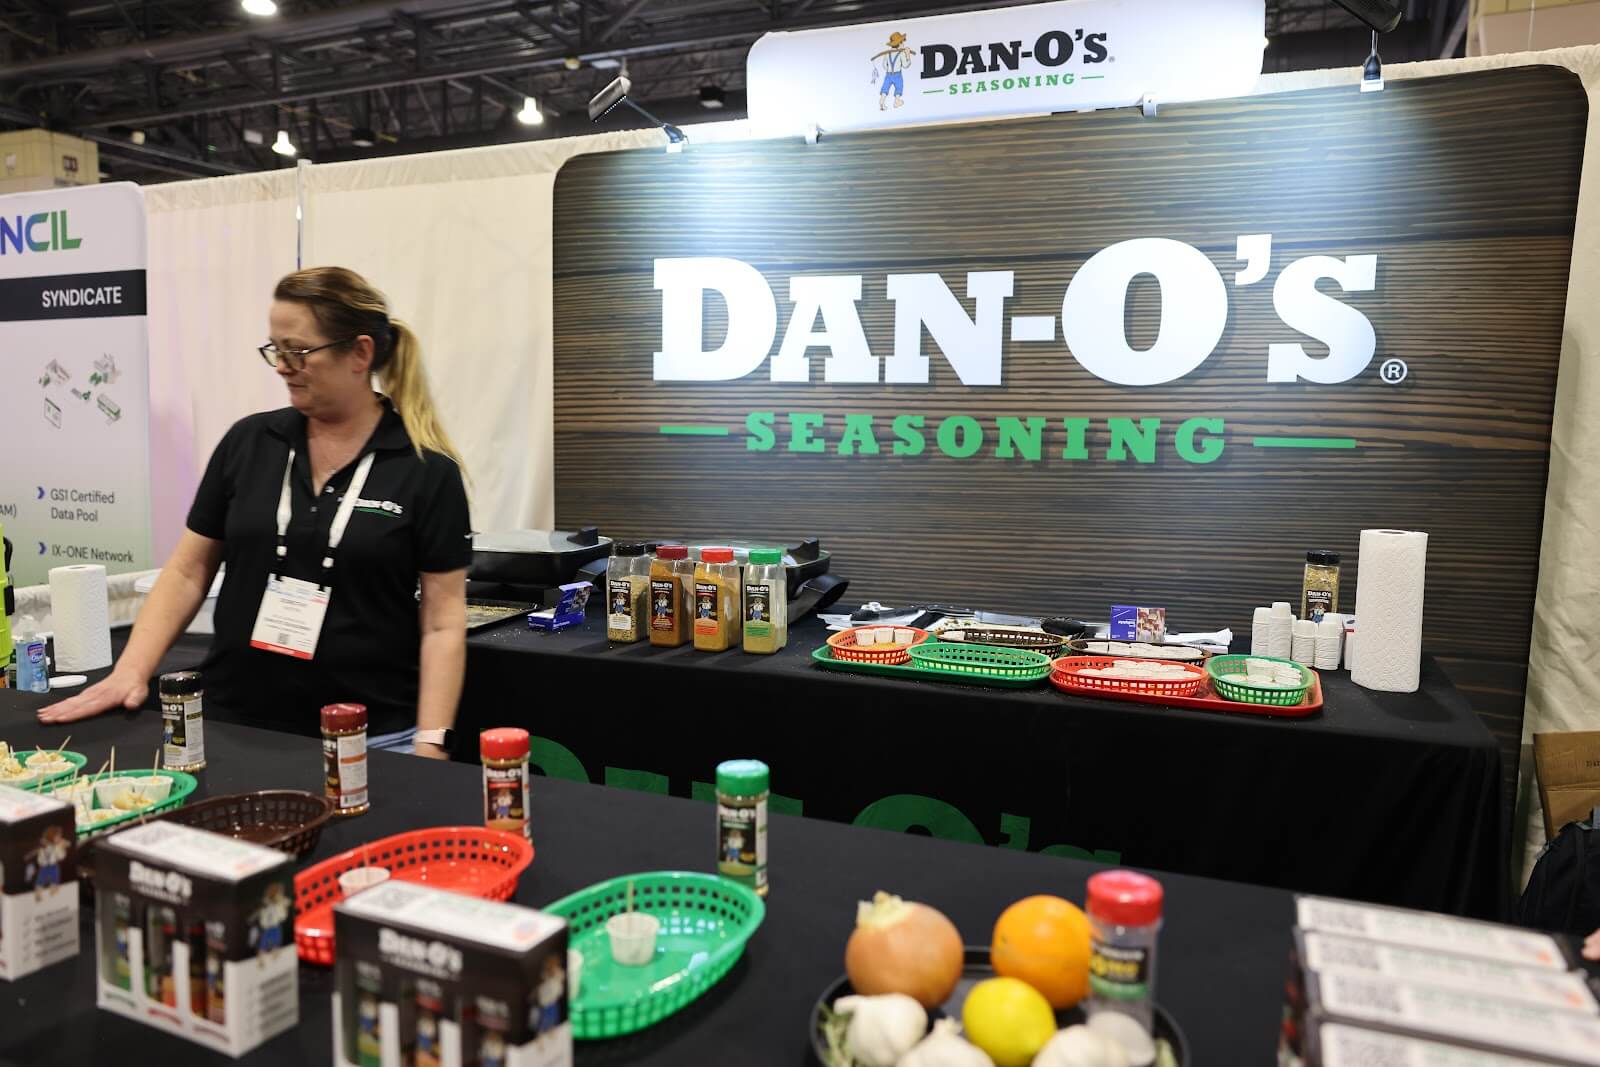 dan-o's seasoning booth at expo east 2022